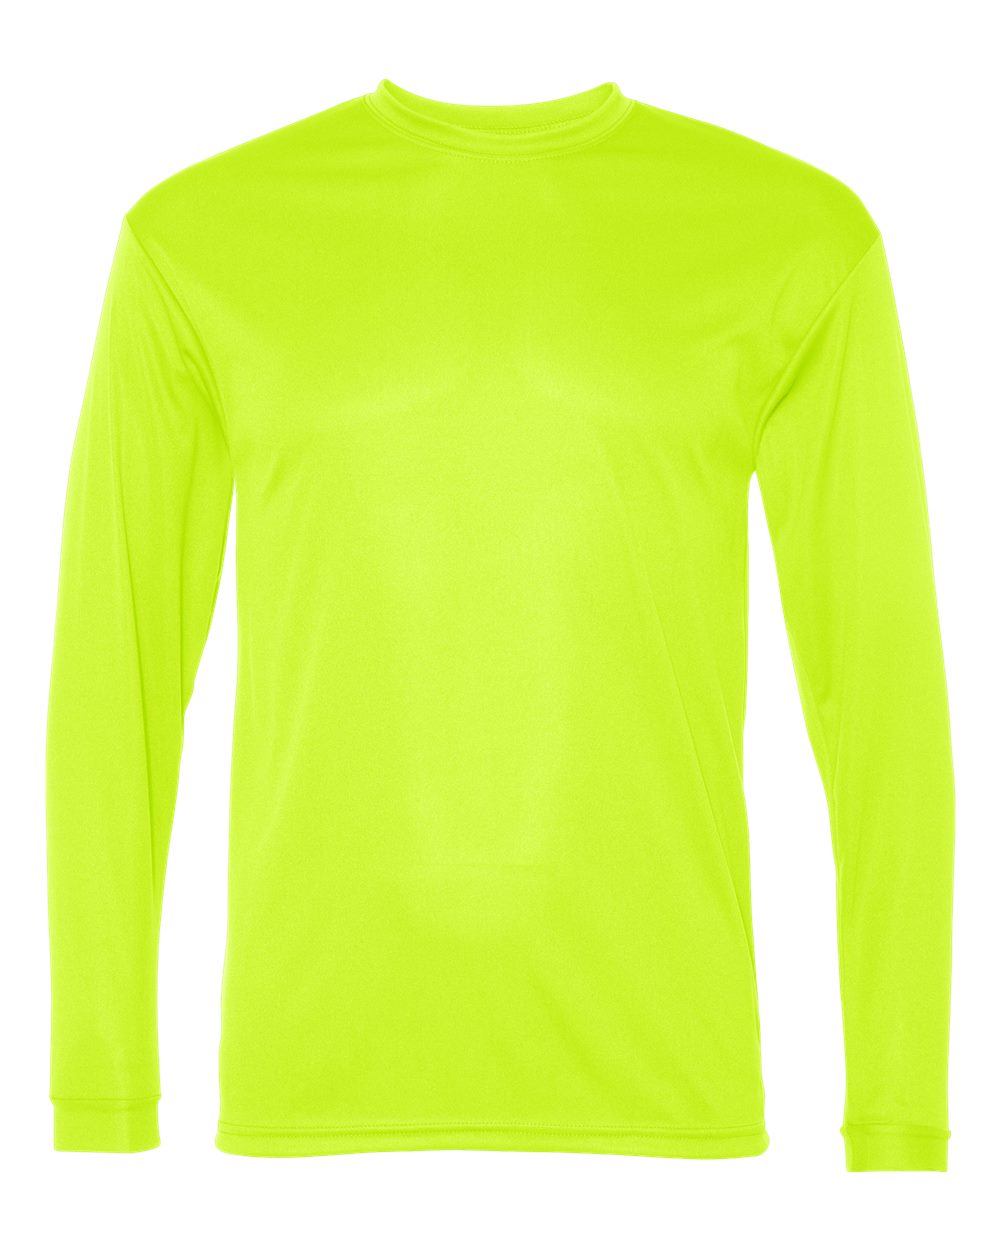 C2 Sport 5104 Performance Shirt :: Safety Yellow, Size 2XL